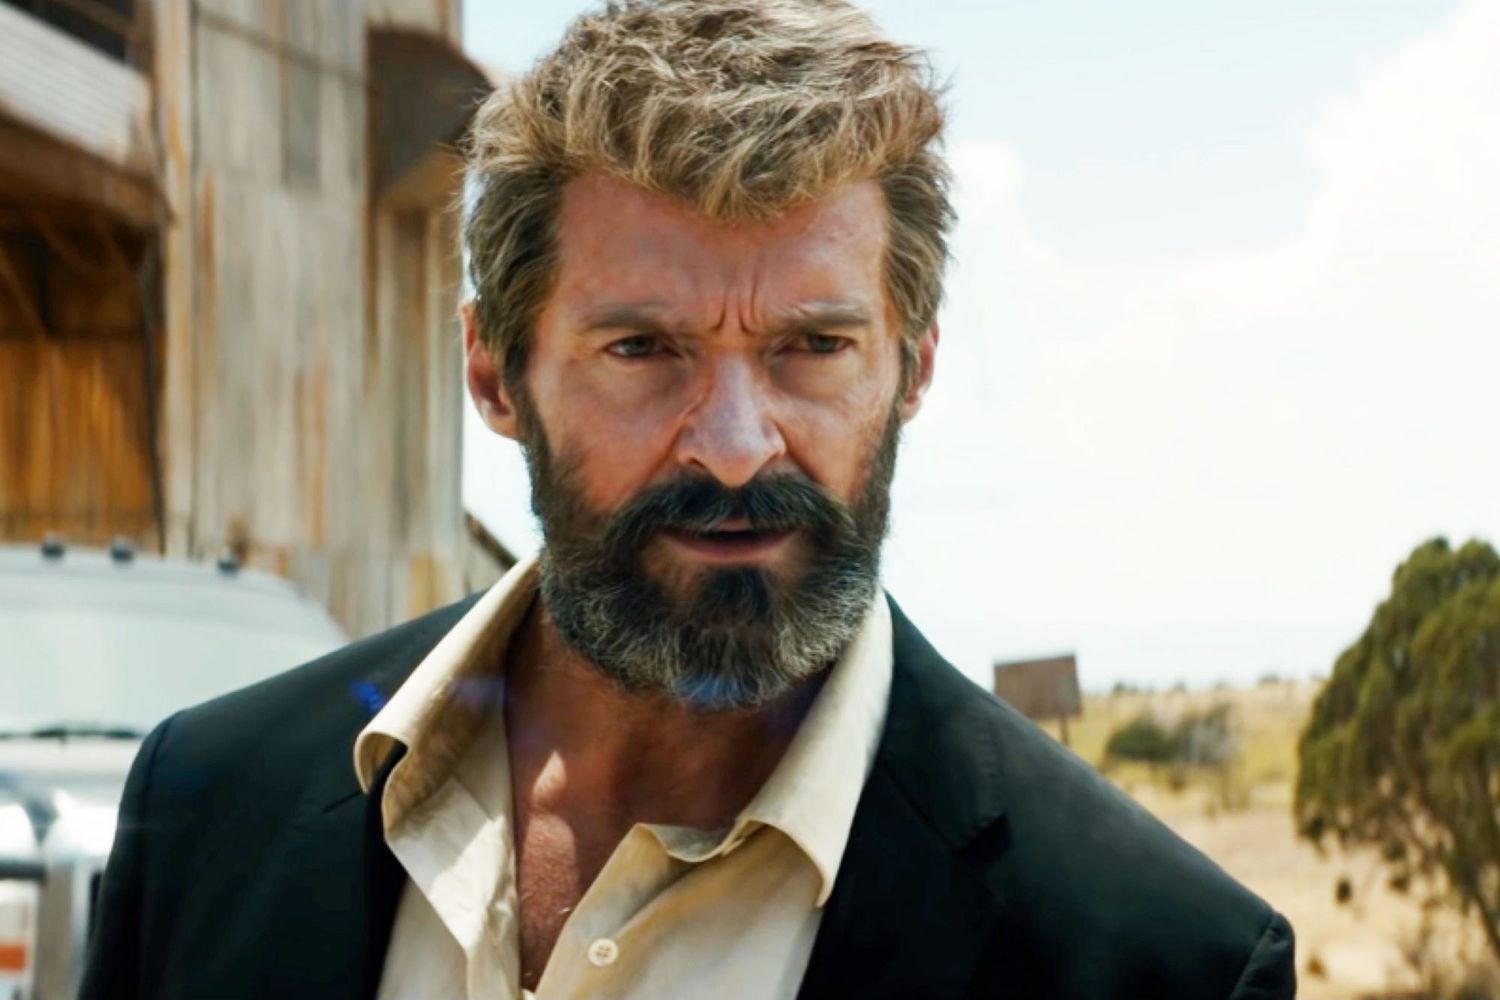 Hugh Jackman as Logan/Wolverine in "Logan" (2017)